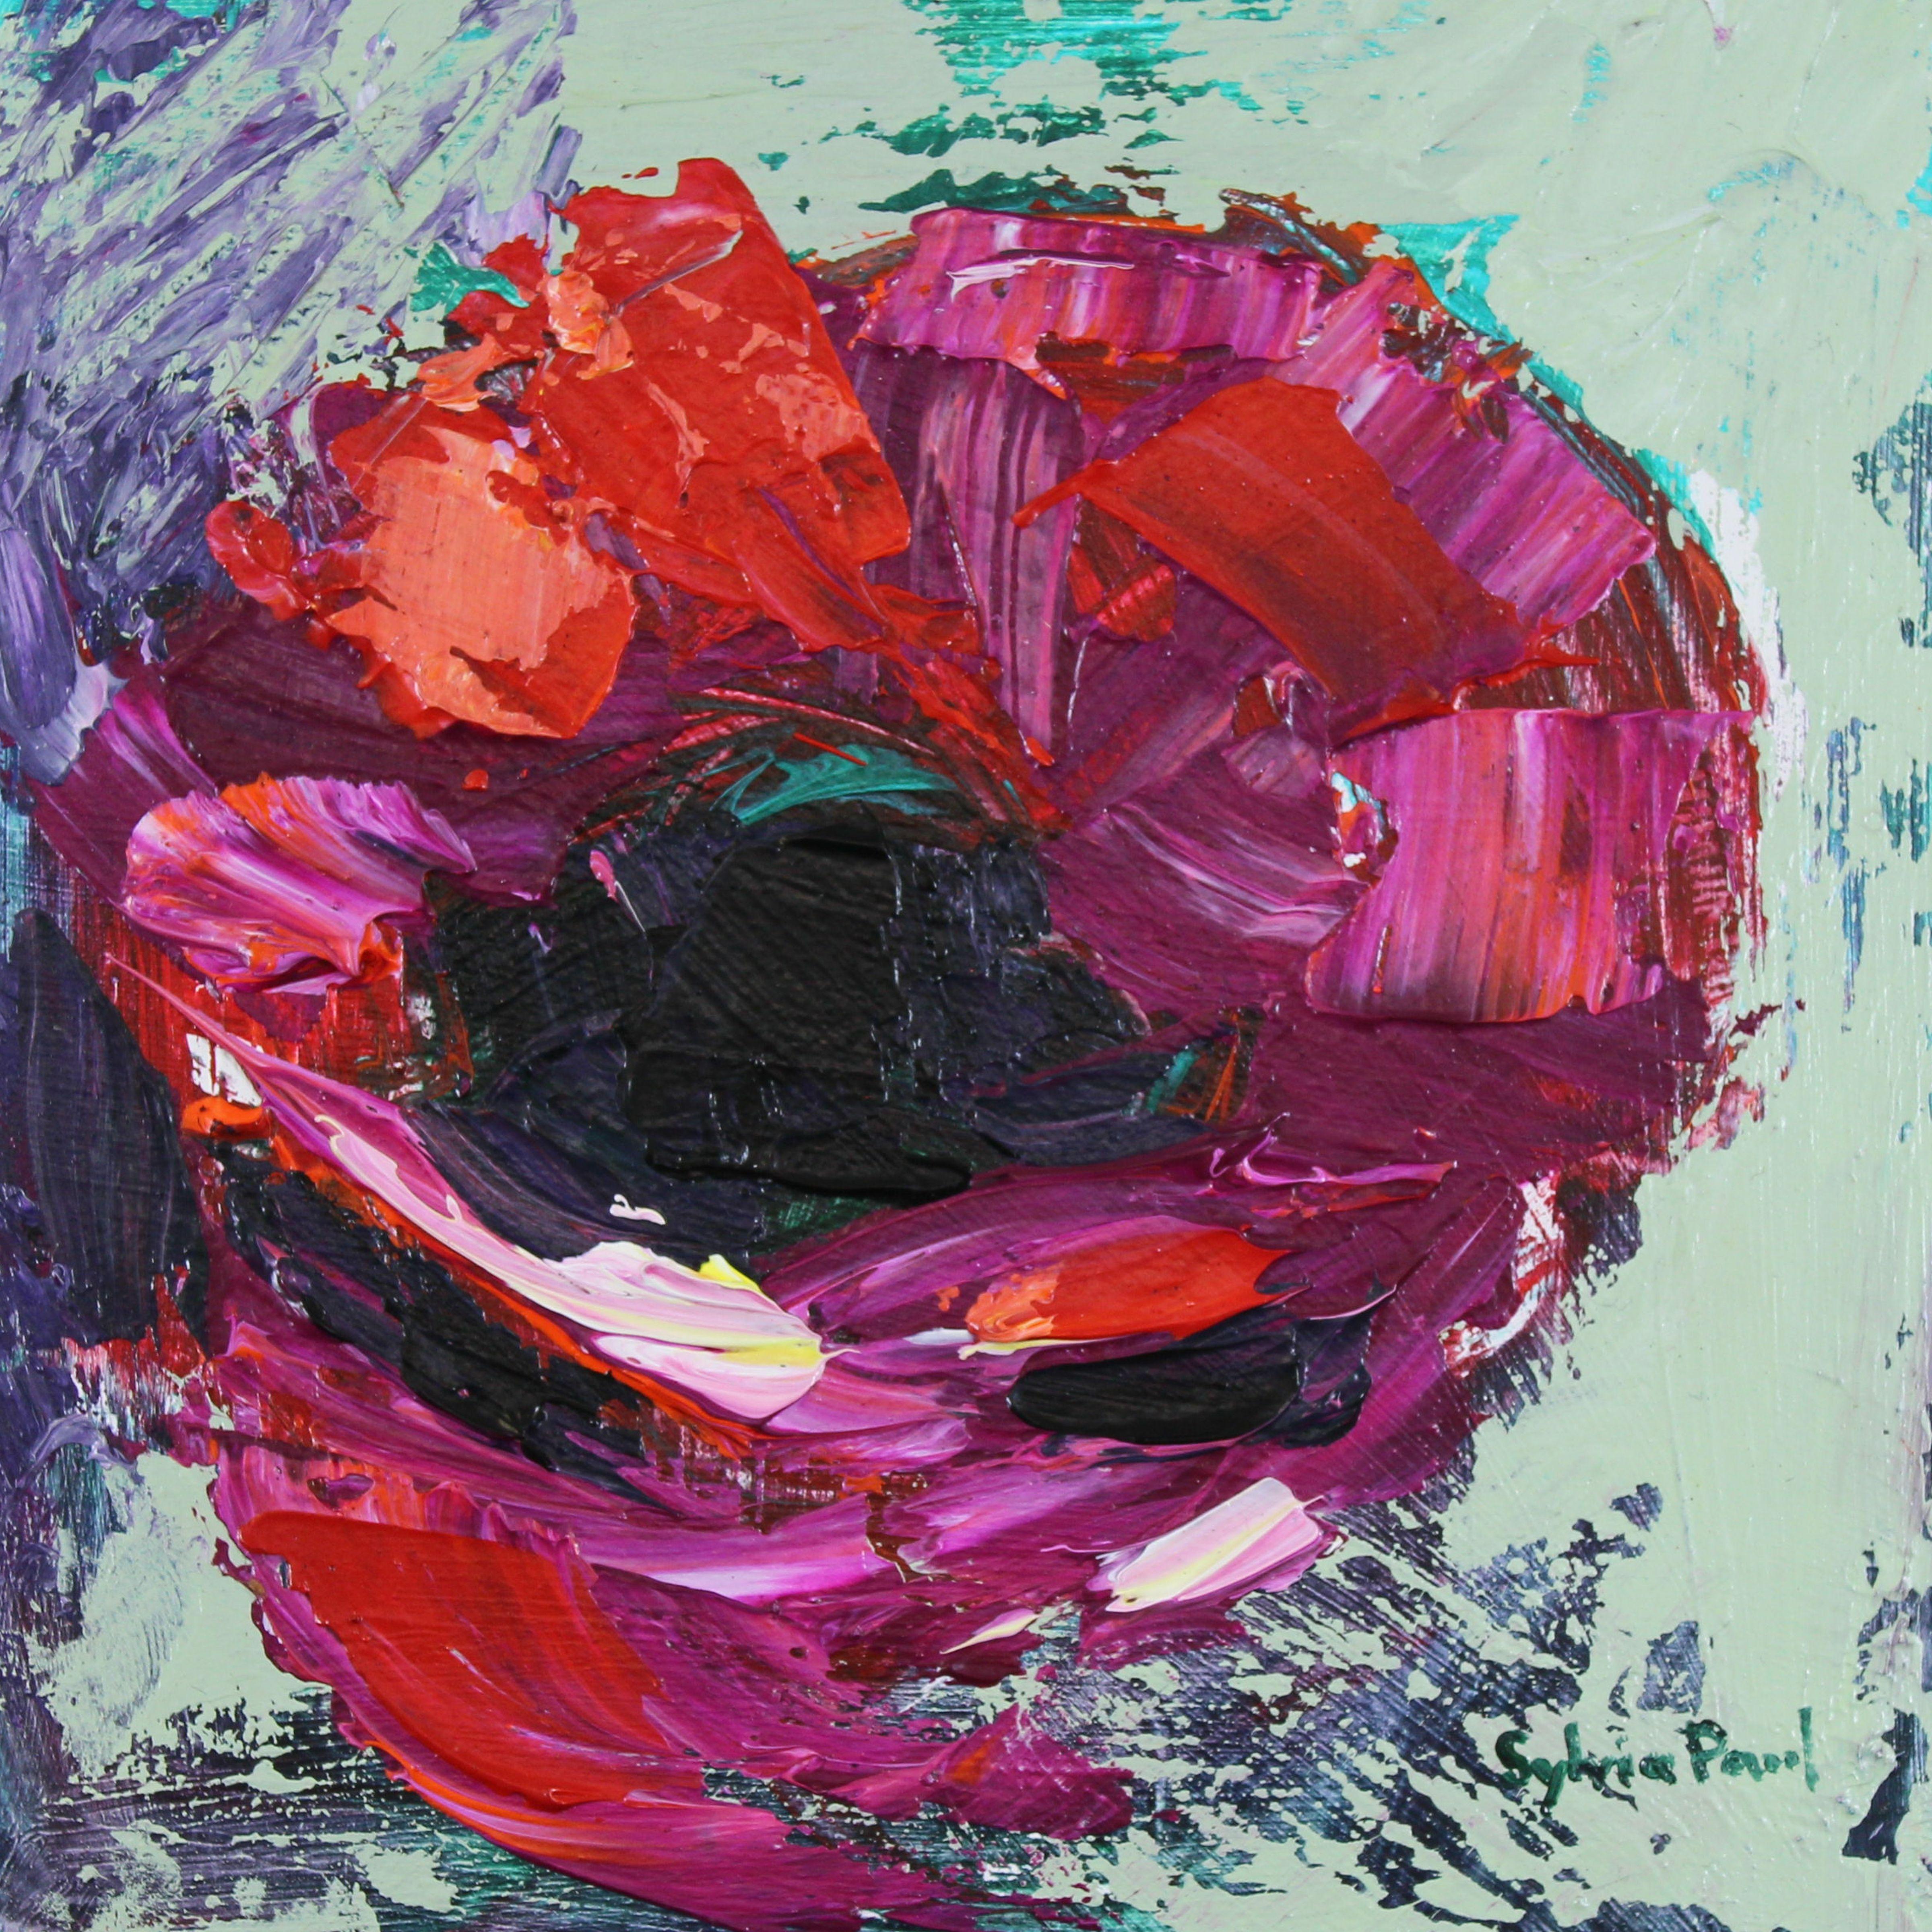 Sylvia Paul Abstract Painting - Sweet Little Poppy - Abstract Flower Mini Textured Oil Painting Modern Art 